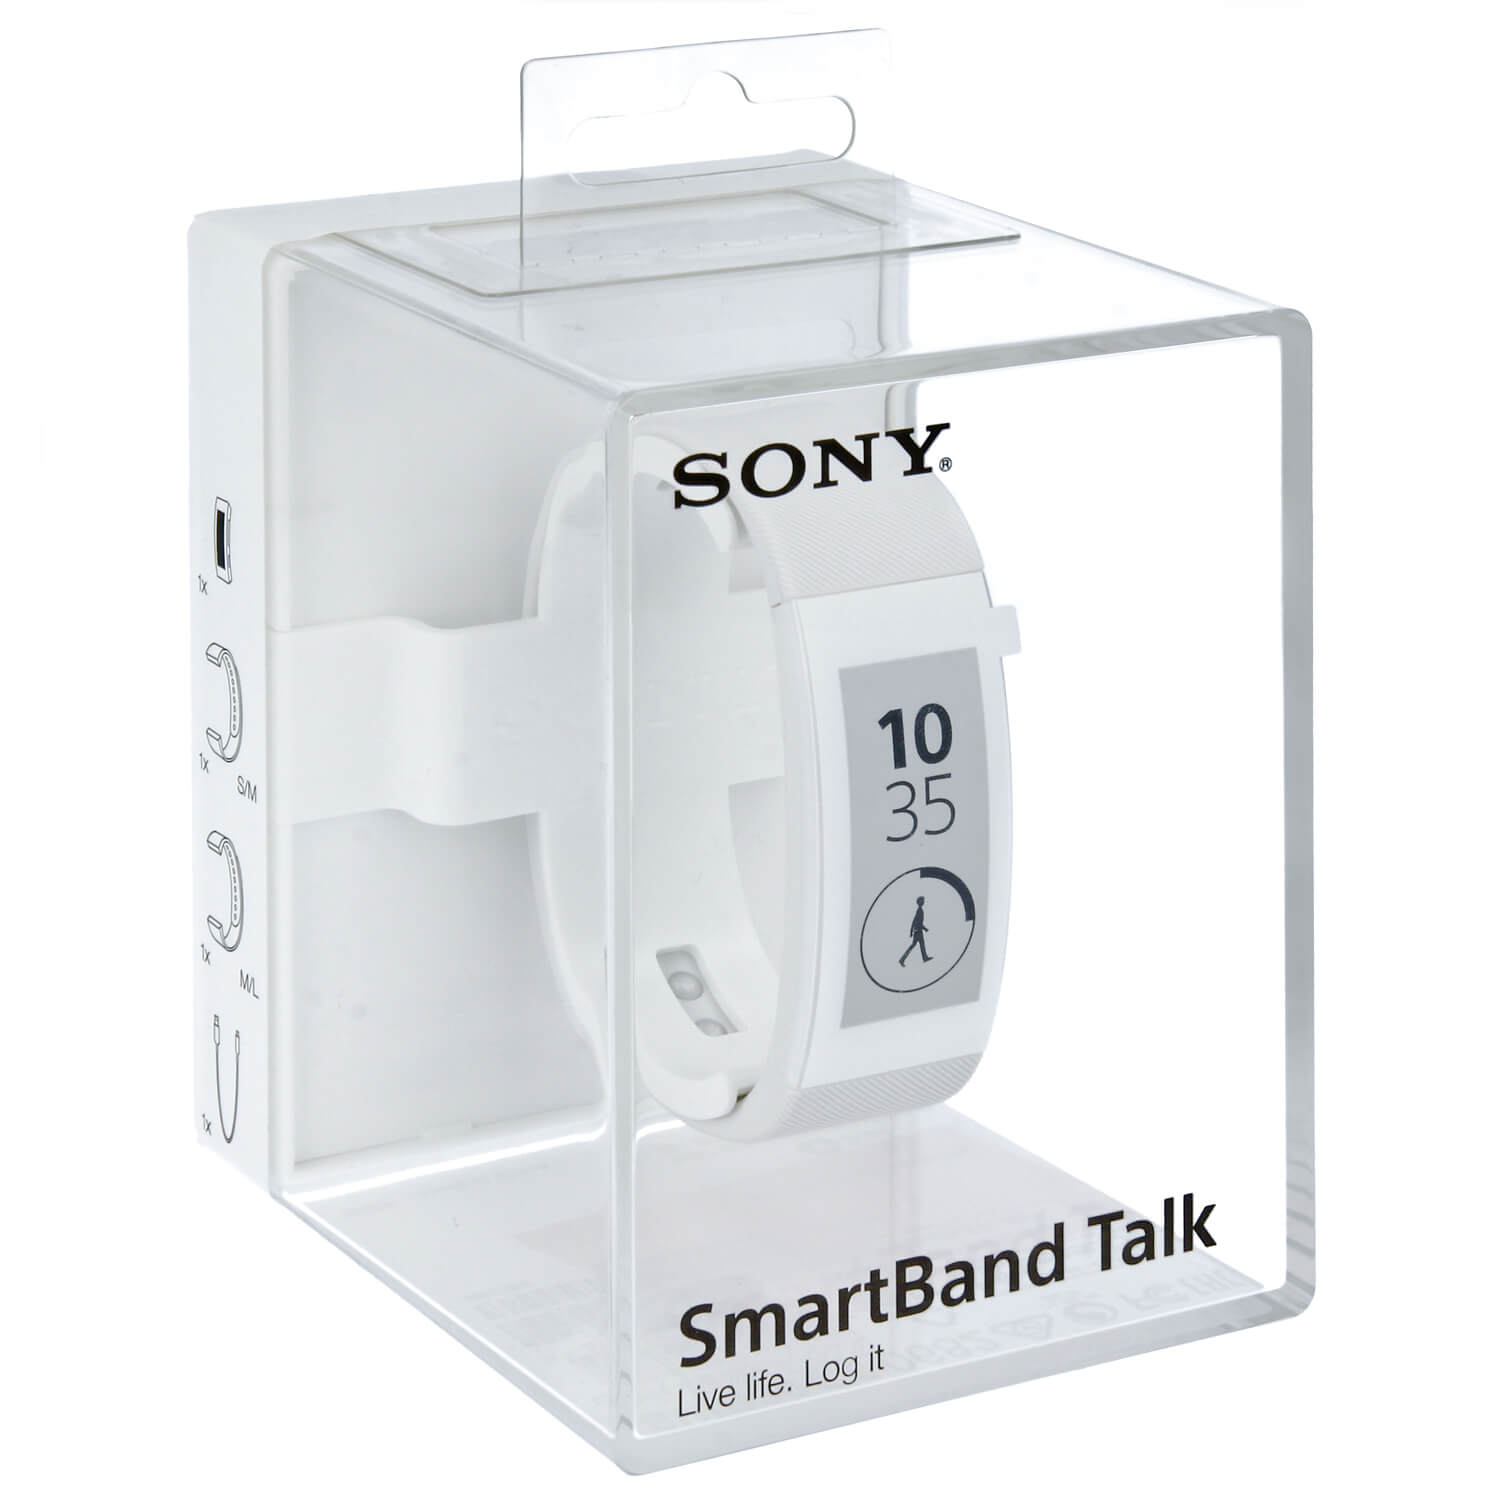 Sony Smartband Talk Swr30 White White Price Dice Bg